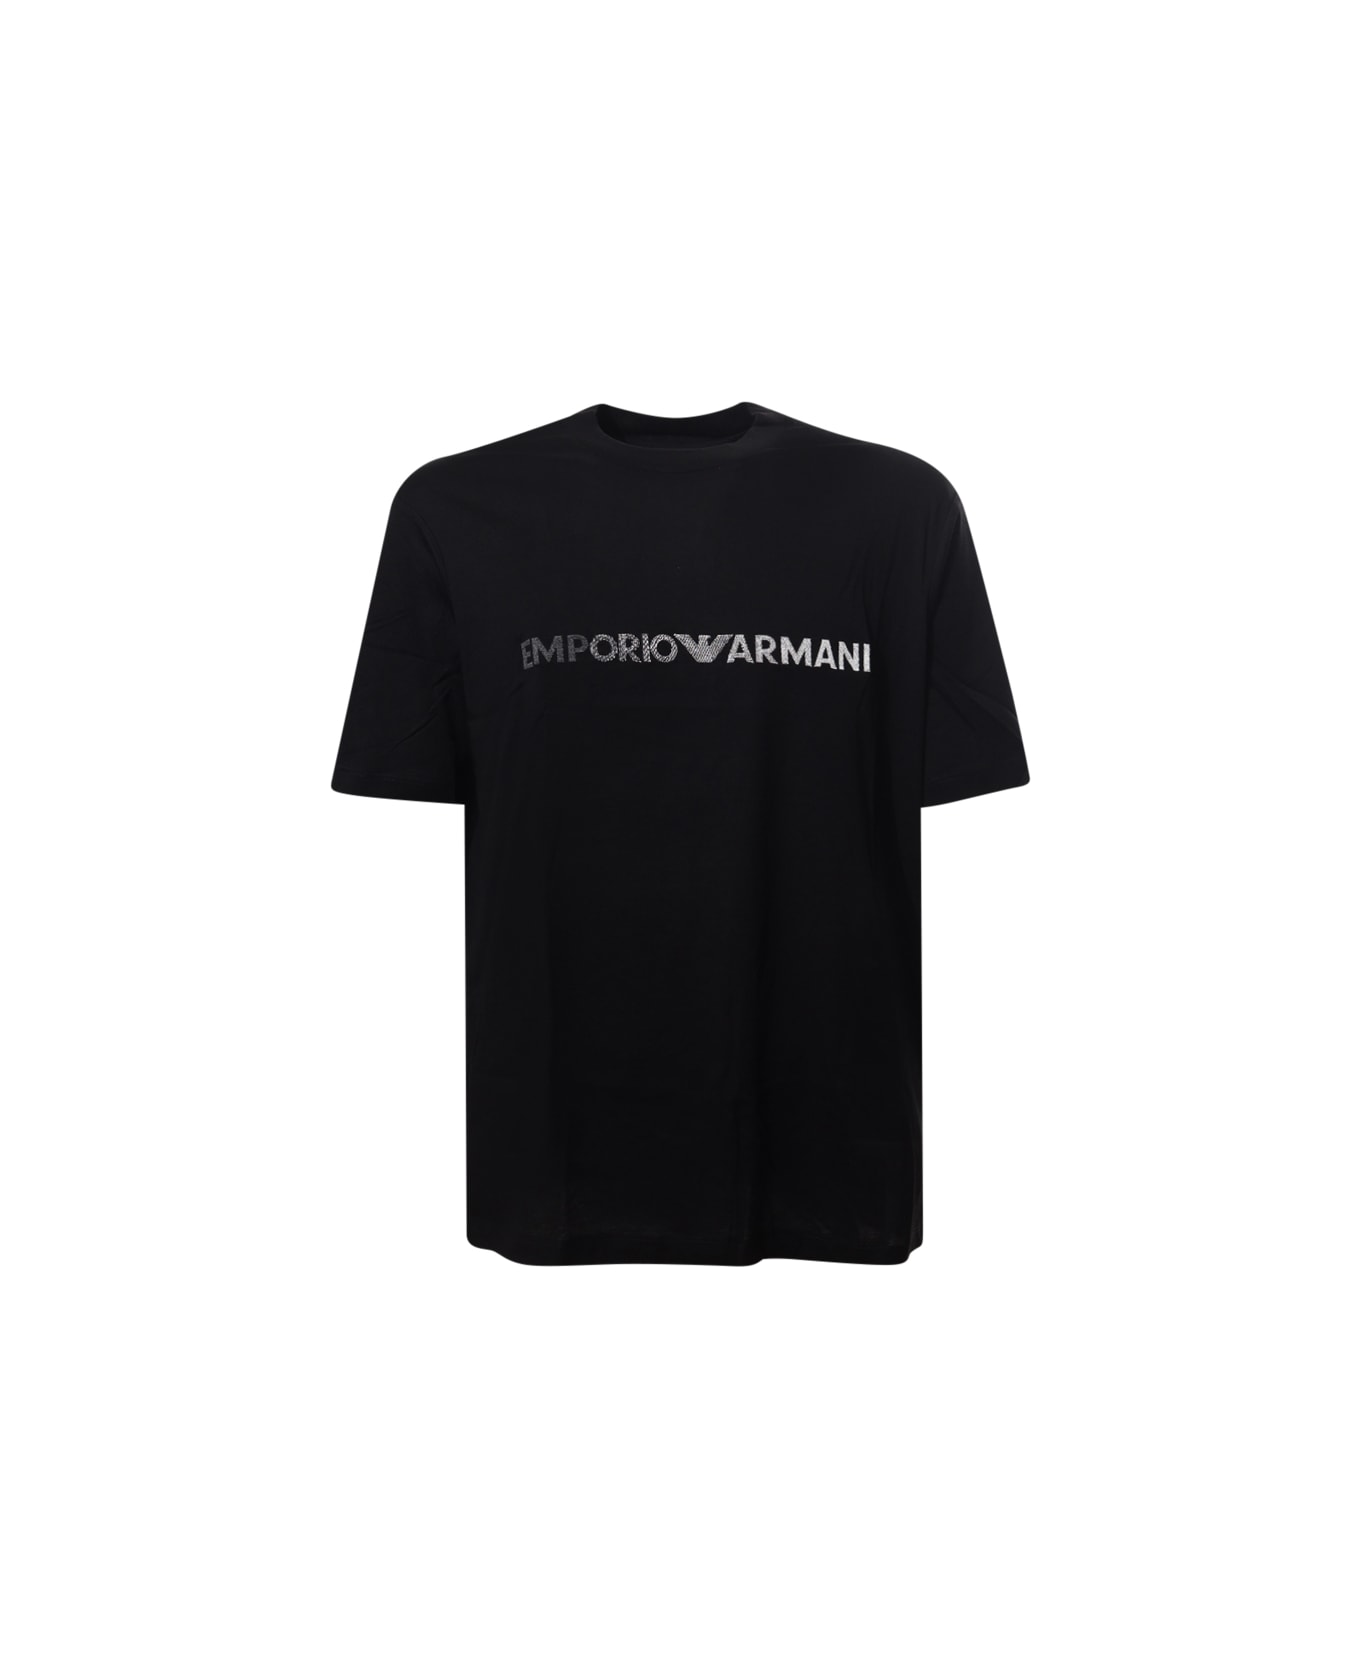 Emporio Armani T-shirt Emporio Armani - Black